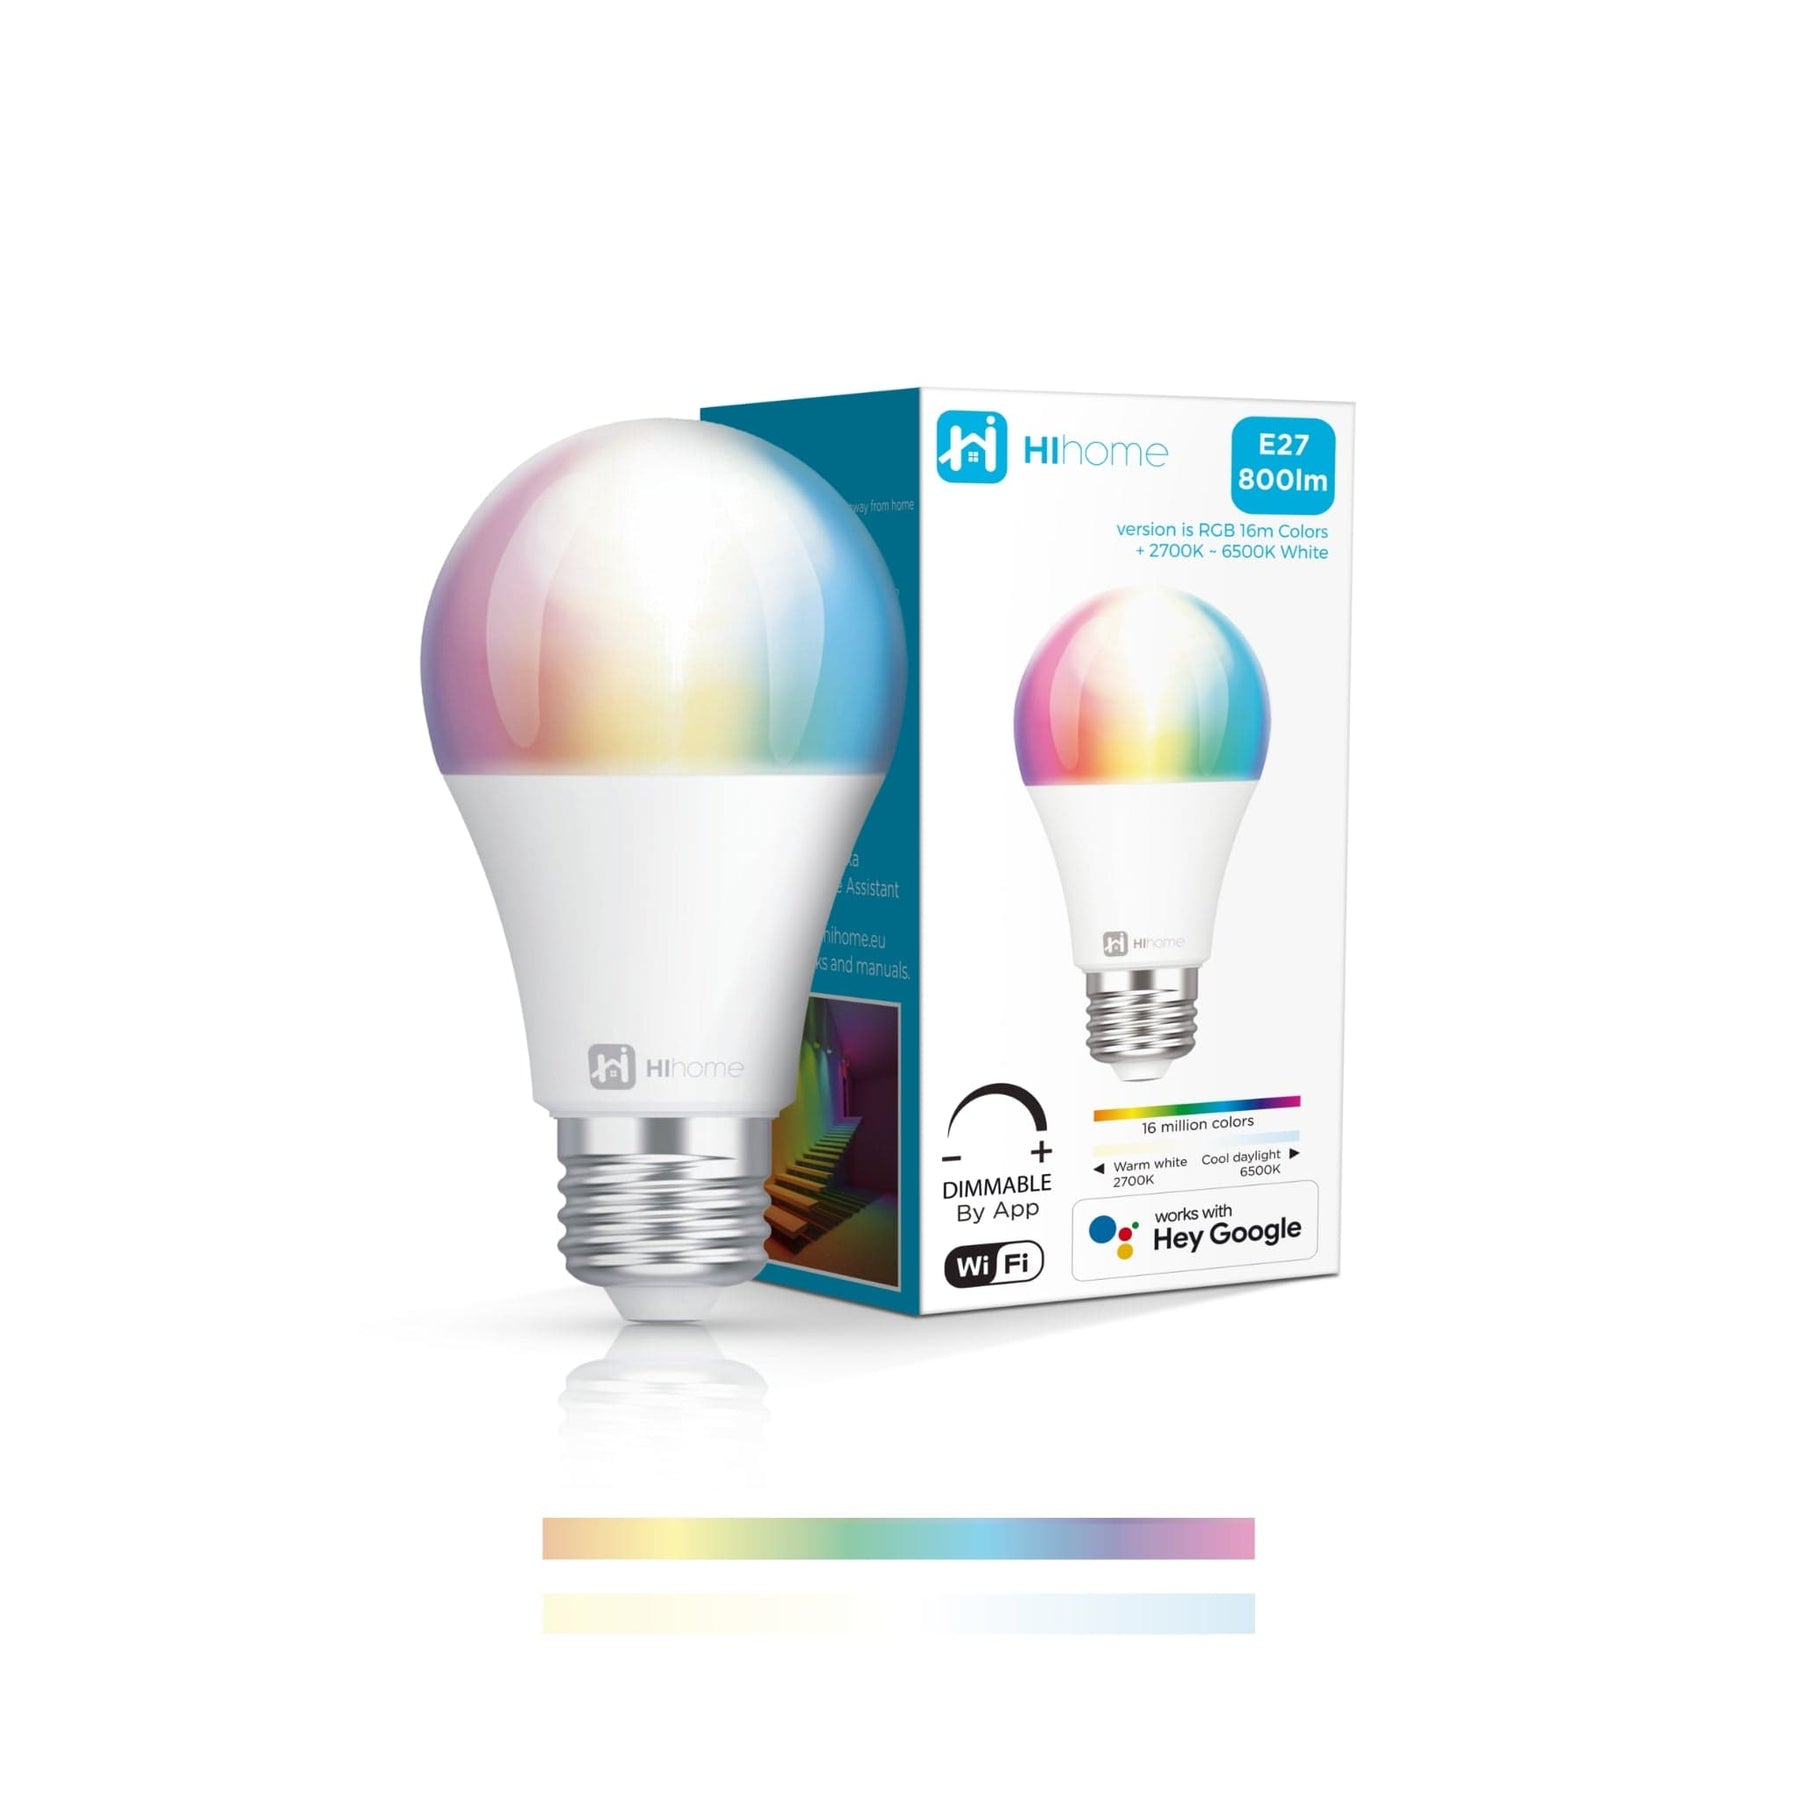 Hihome Smart LED WiFi Bulb Gen.2 RGB 16M Colors + Warm White 2700K to Cool White 6500K